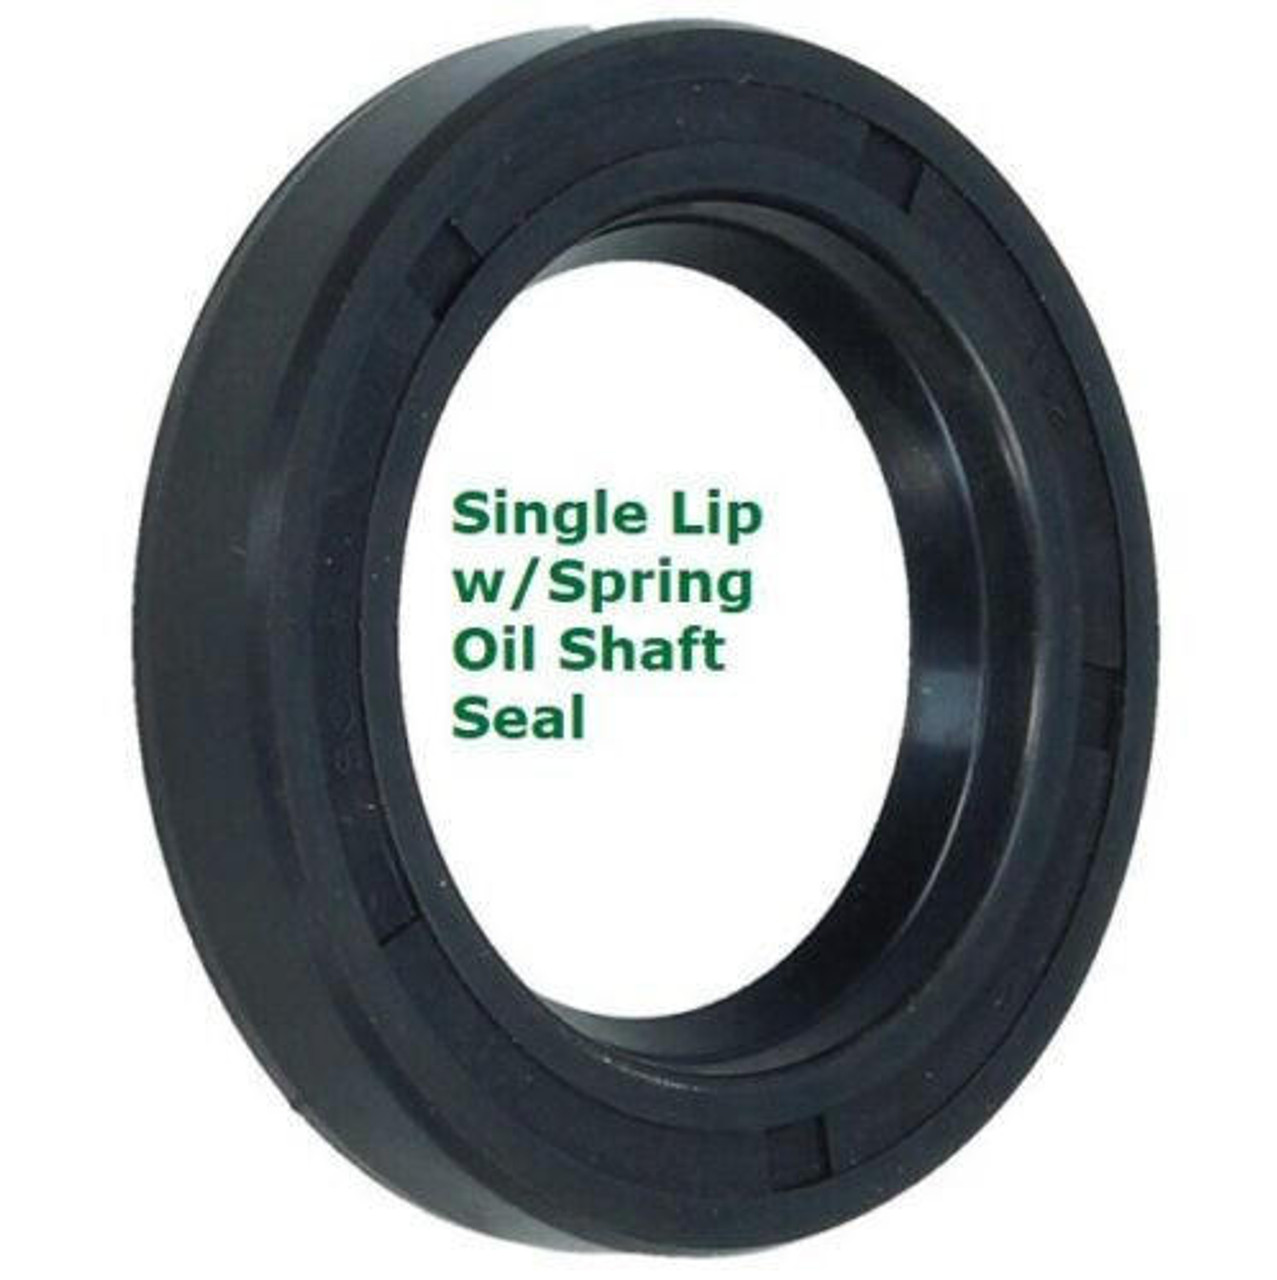 Metric Oil Shaft Seal 500 x 540 x 20mm   Single Lip   Price for 1 pc